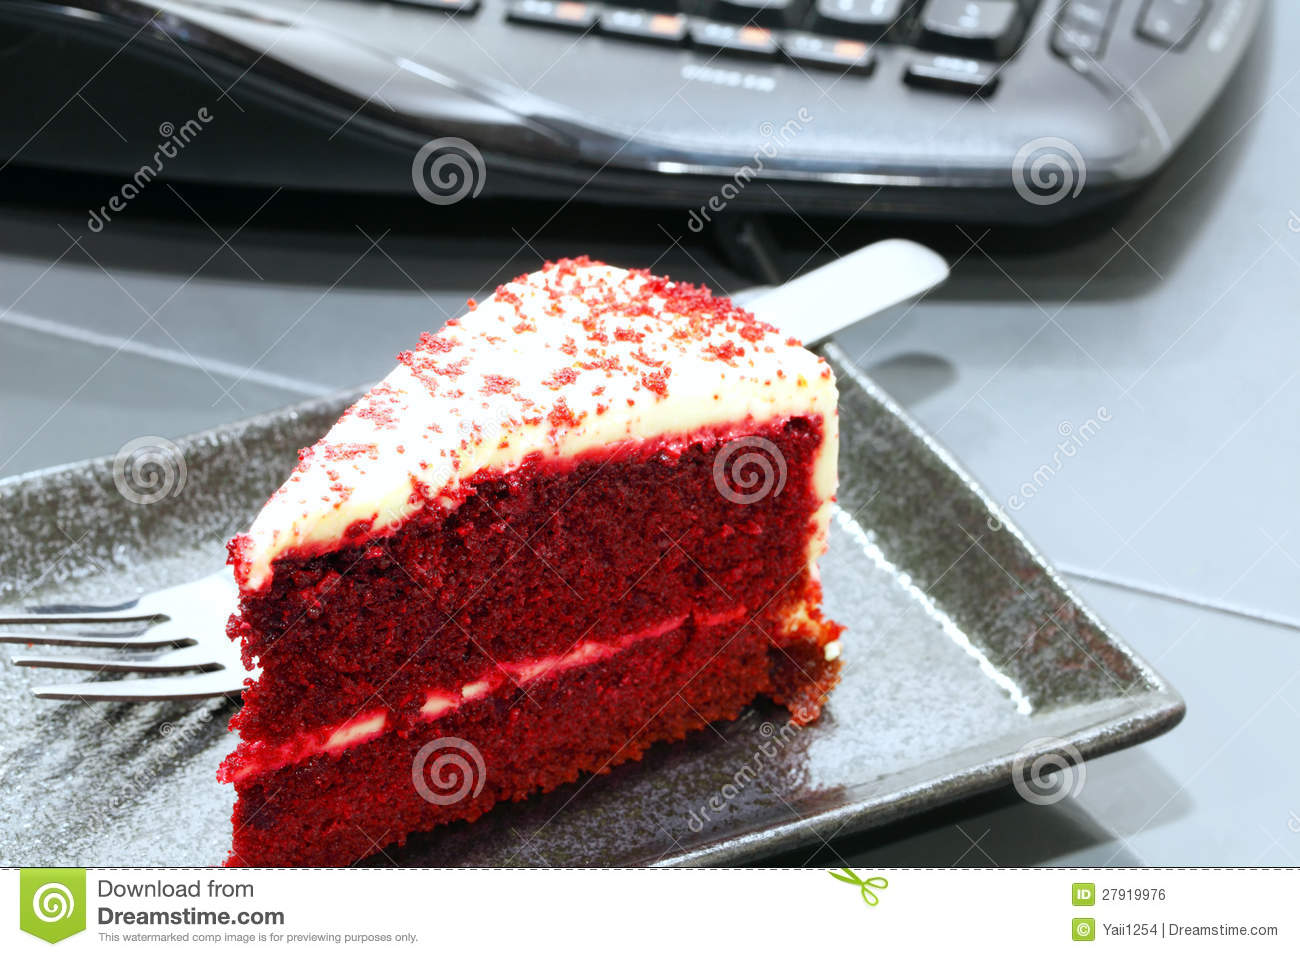 Red Velvet Cake Royalty Free Stock Image   Image  27919976